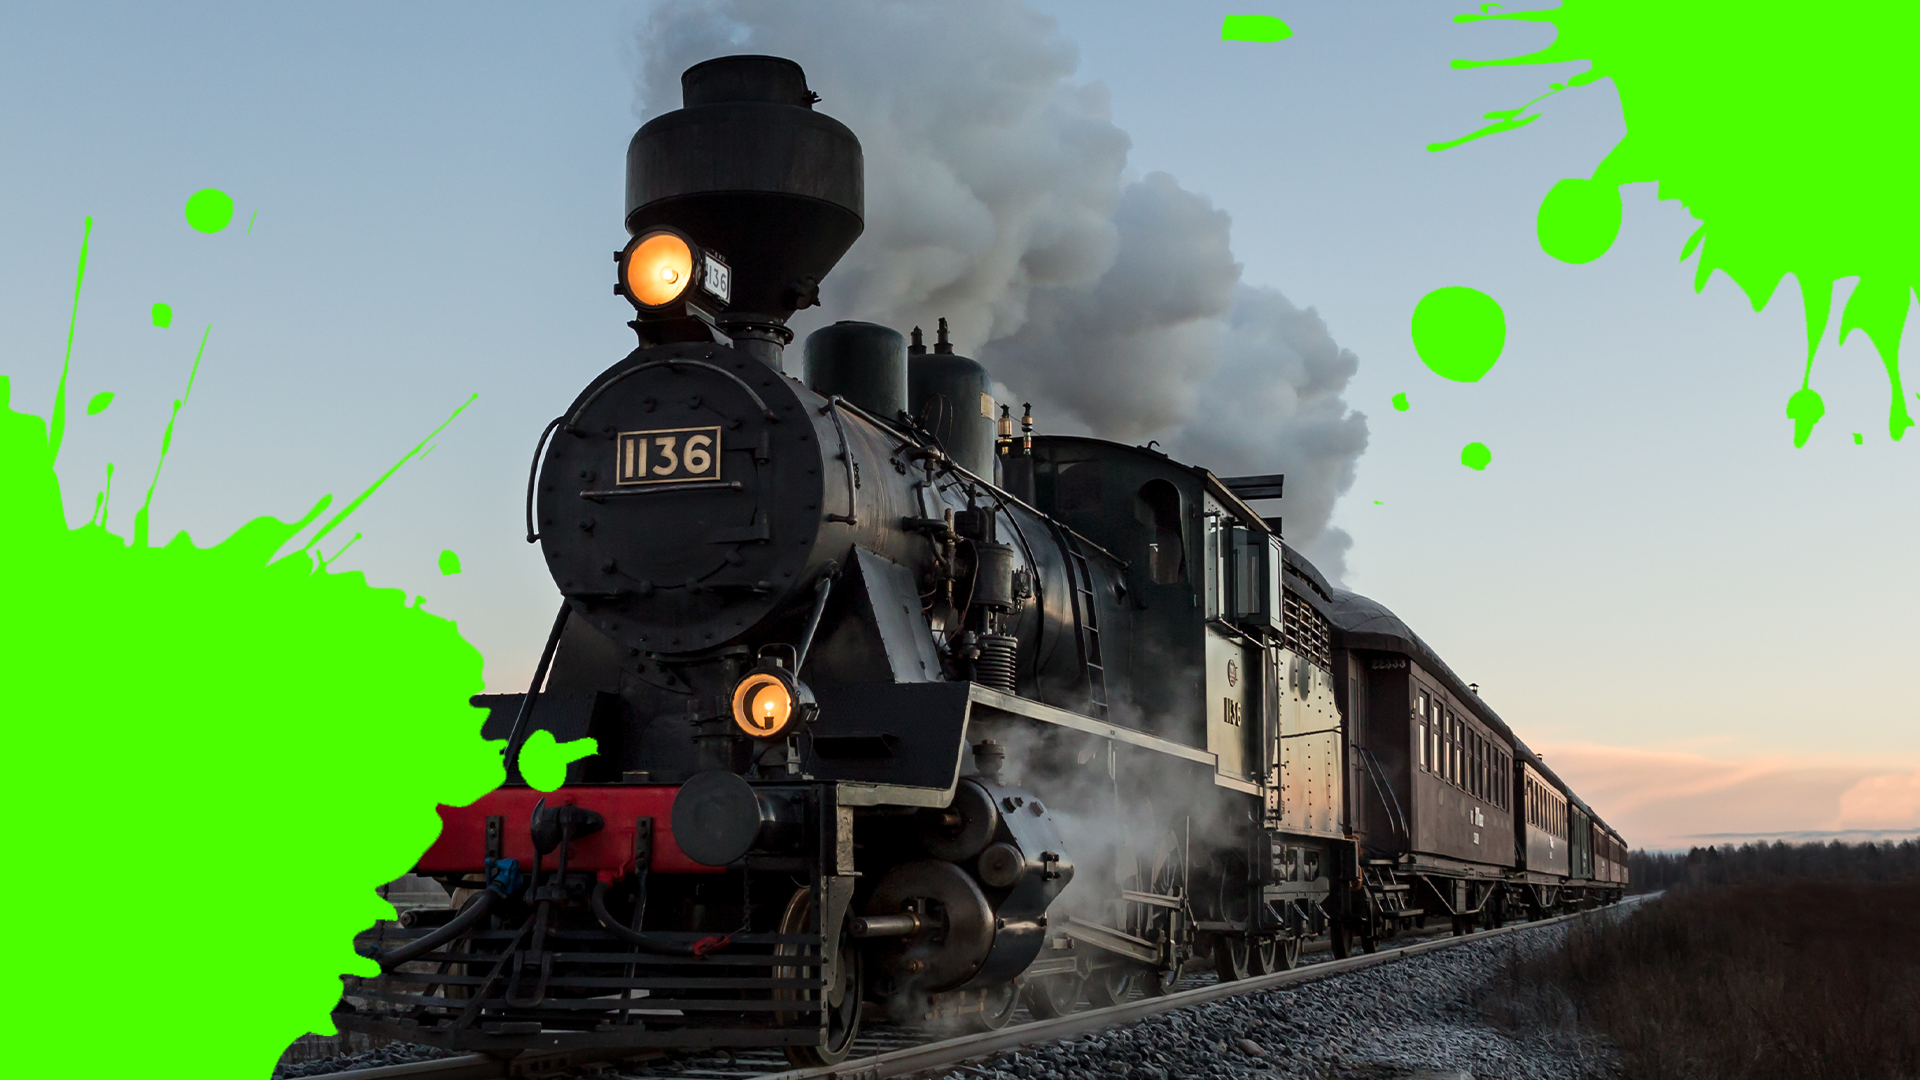 Steam train with green splats